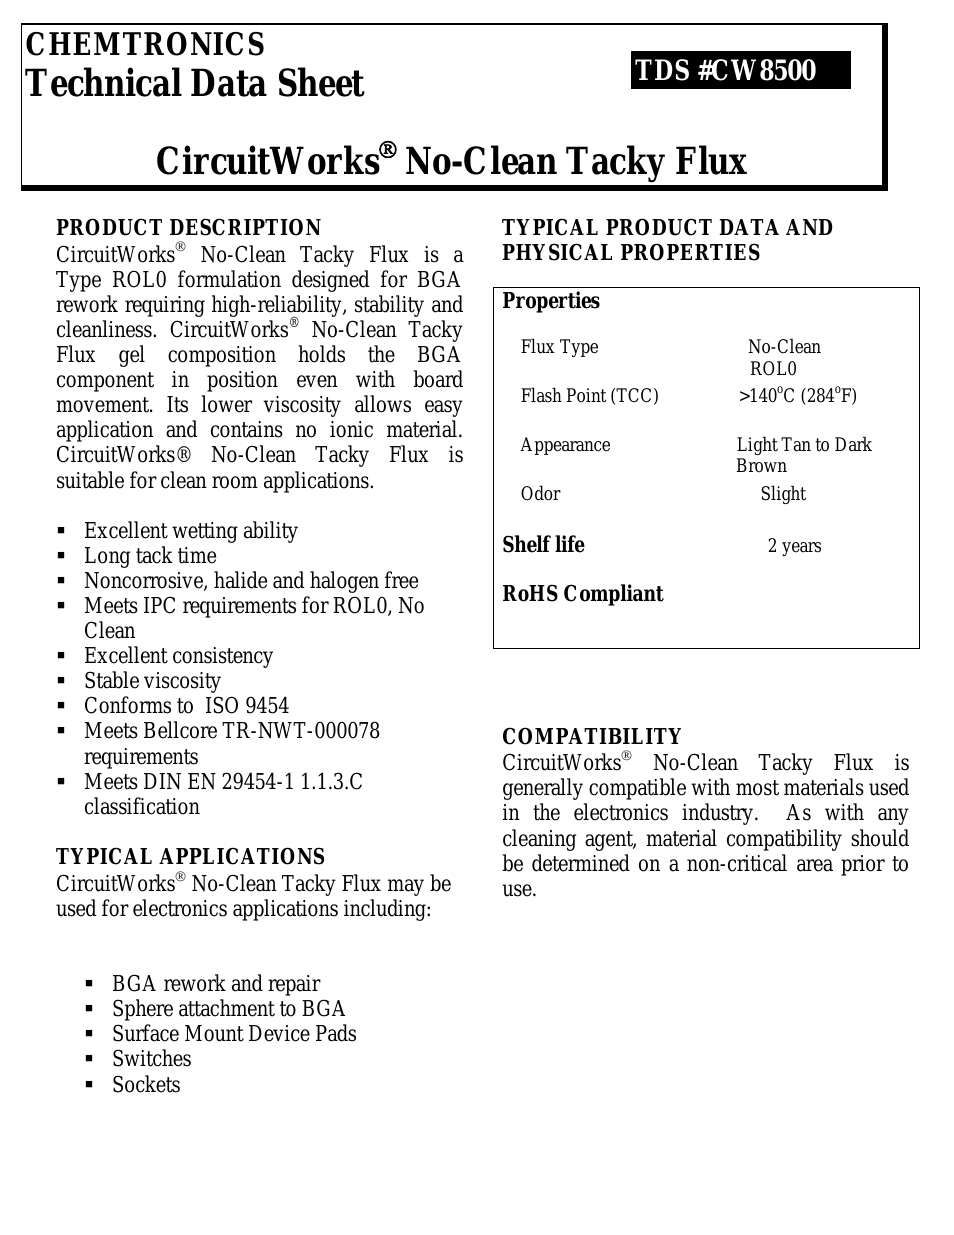 CircuitWorks® No-Clean Tacky Flux CW8500